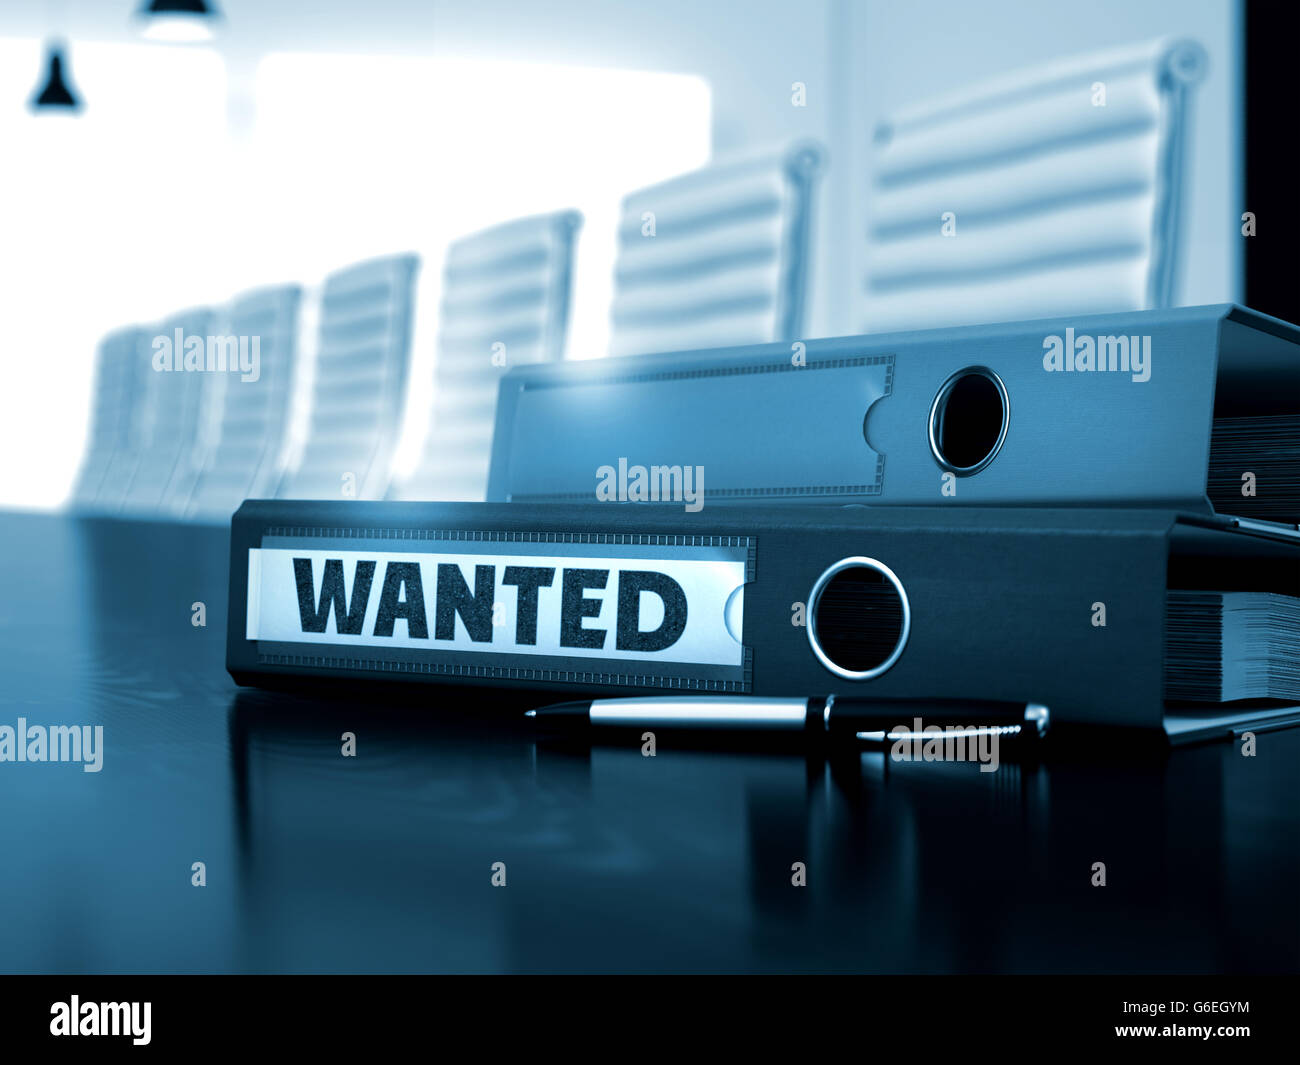 Wanted on File Folder. Blurred Image. Stock Photo